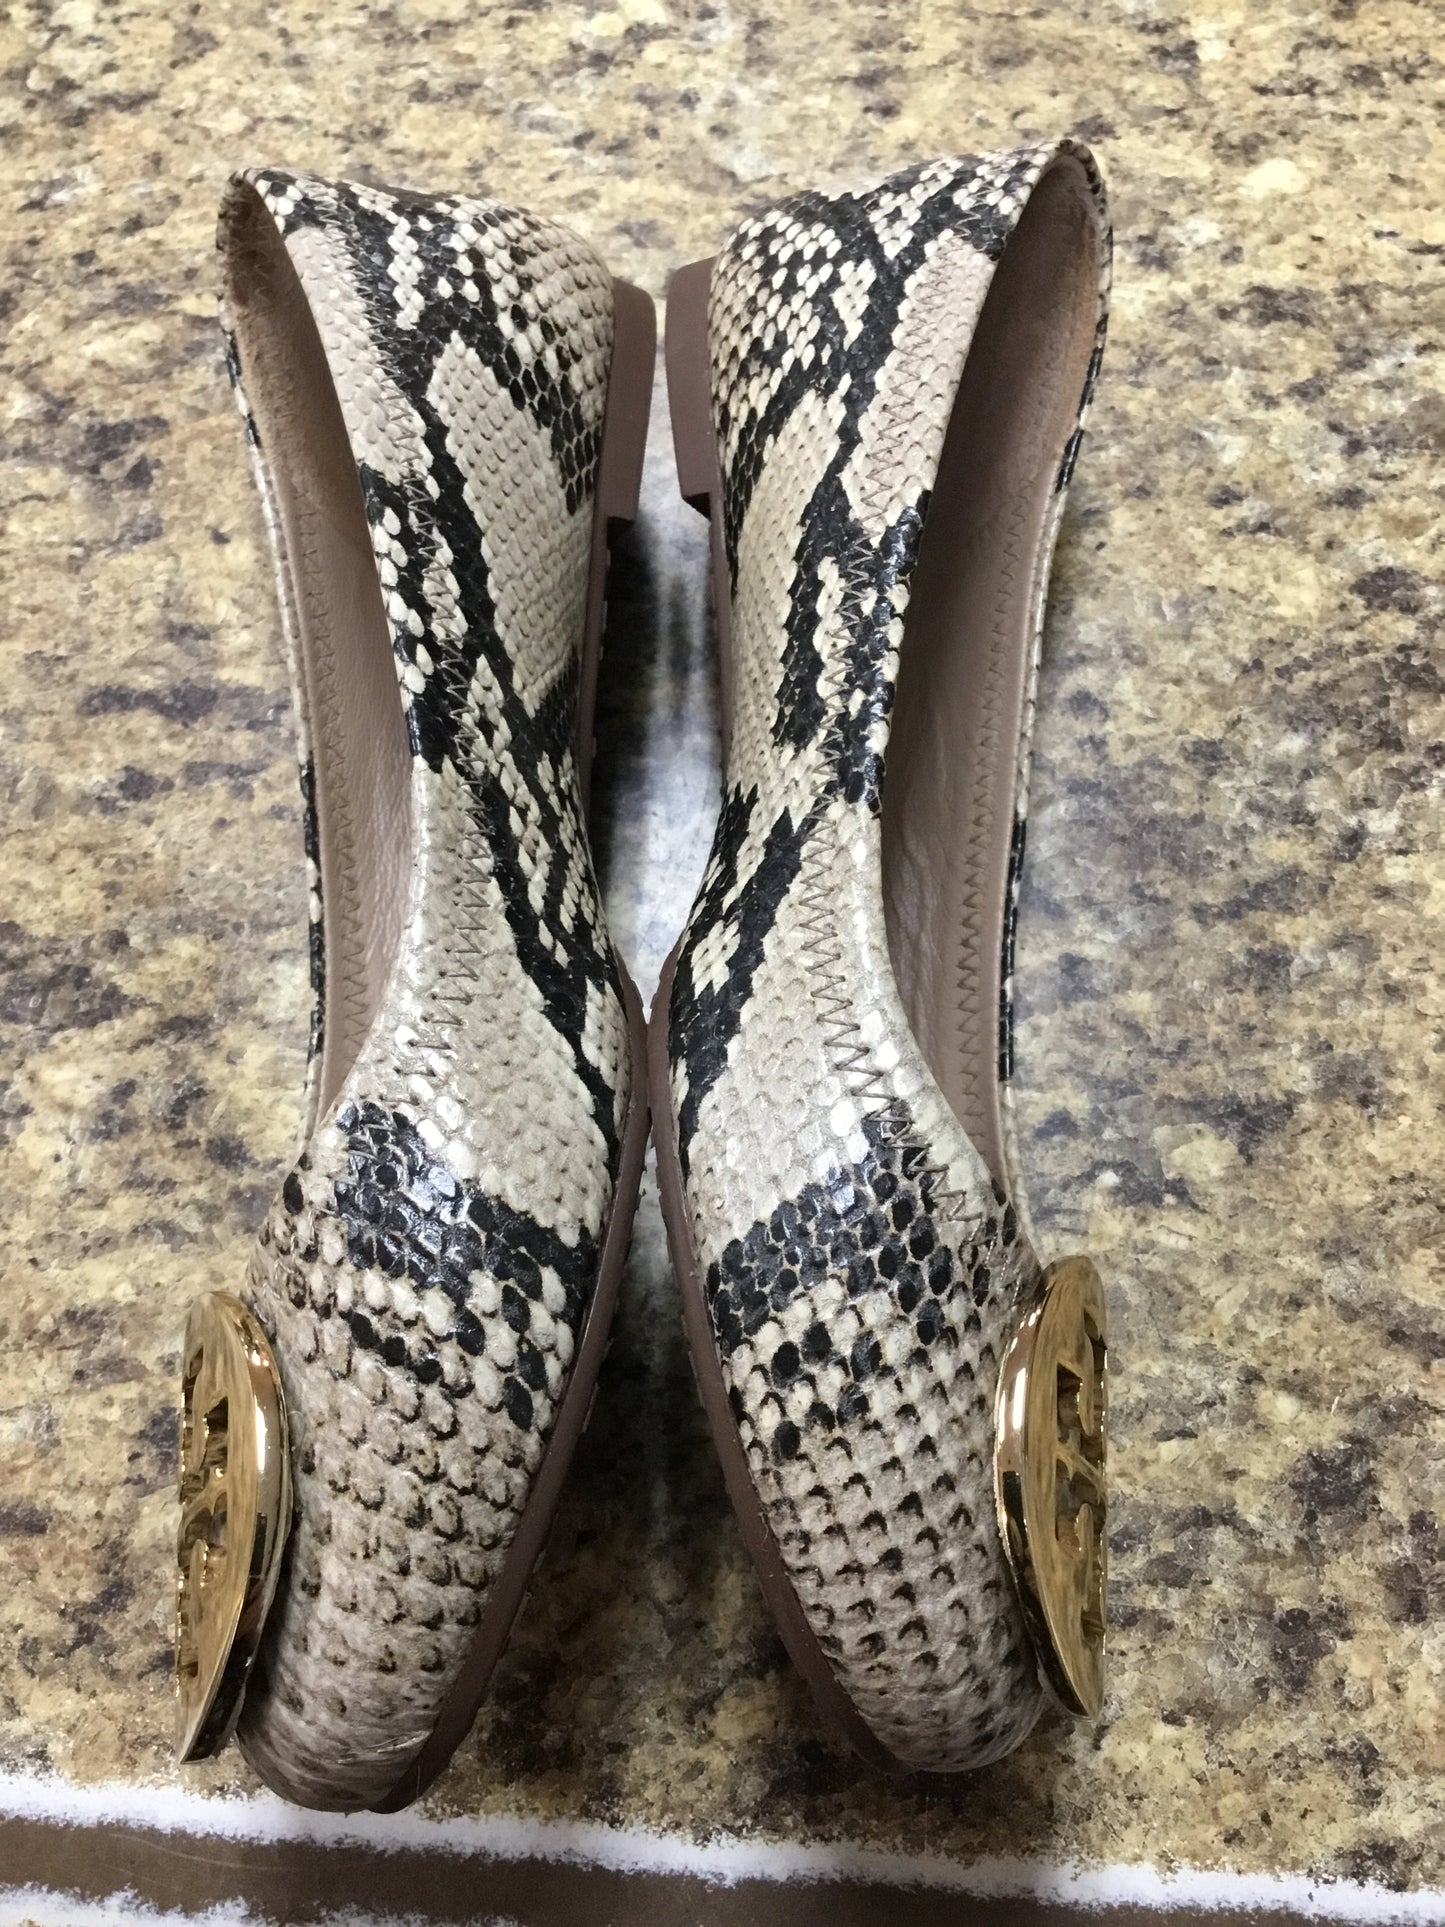 Snakeskin Print Shoes Flats Tory Burch, Size 5.5